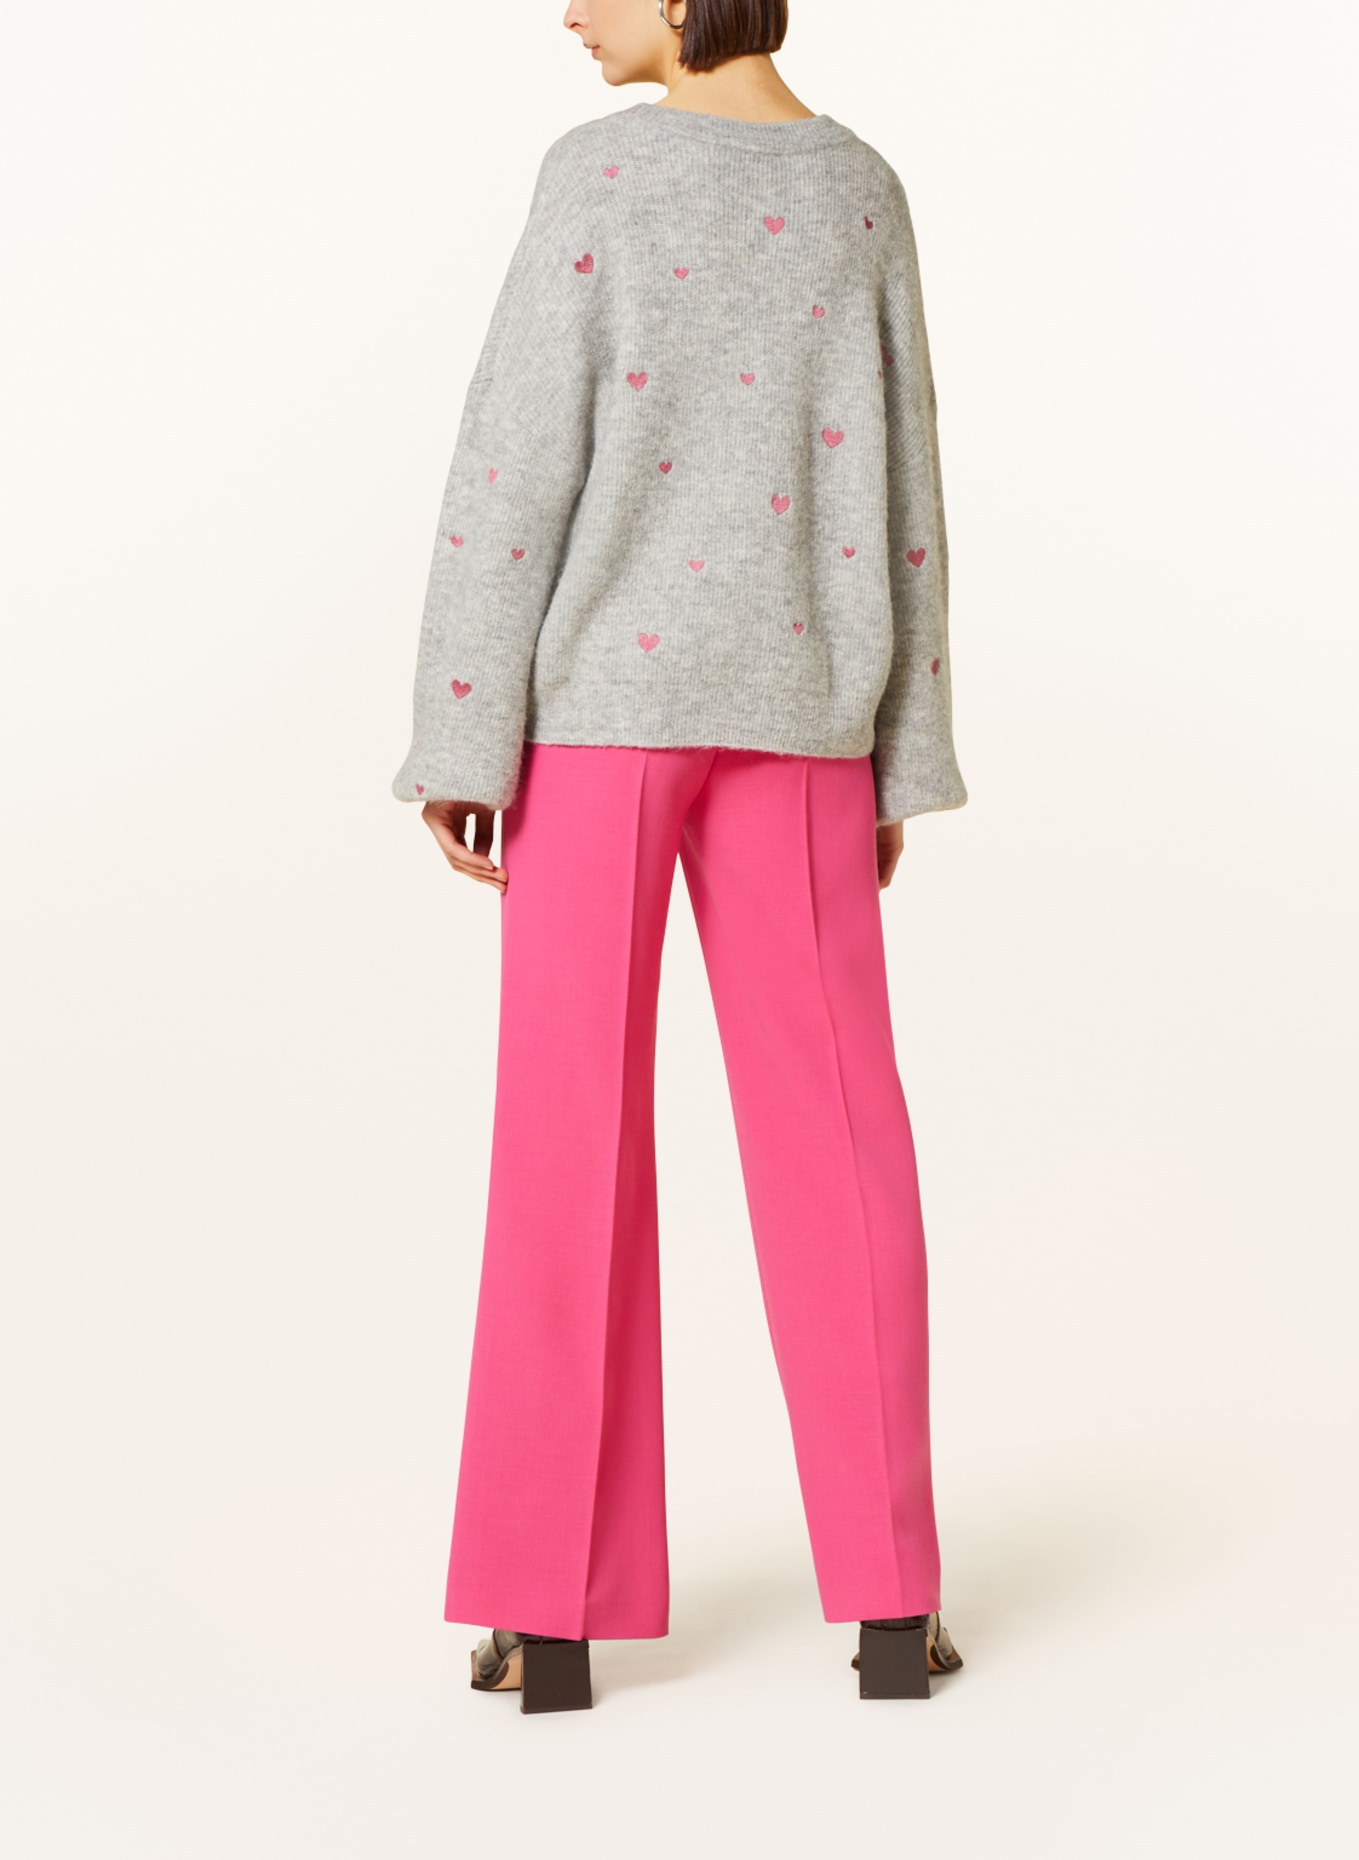 FABIENNE CHAPOT Pullover LIDIA mit Stickereien, Farbe: GRAU/ ALTROSA (Bild 3)